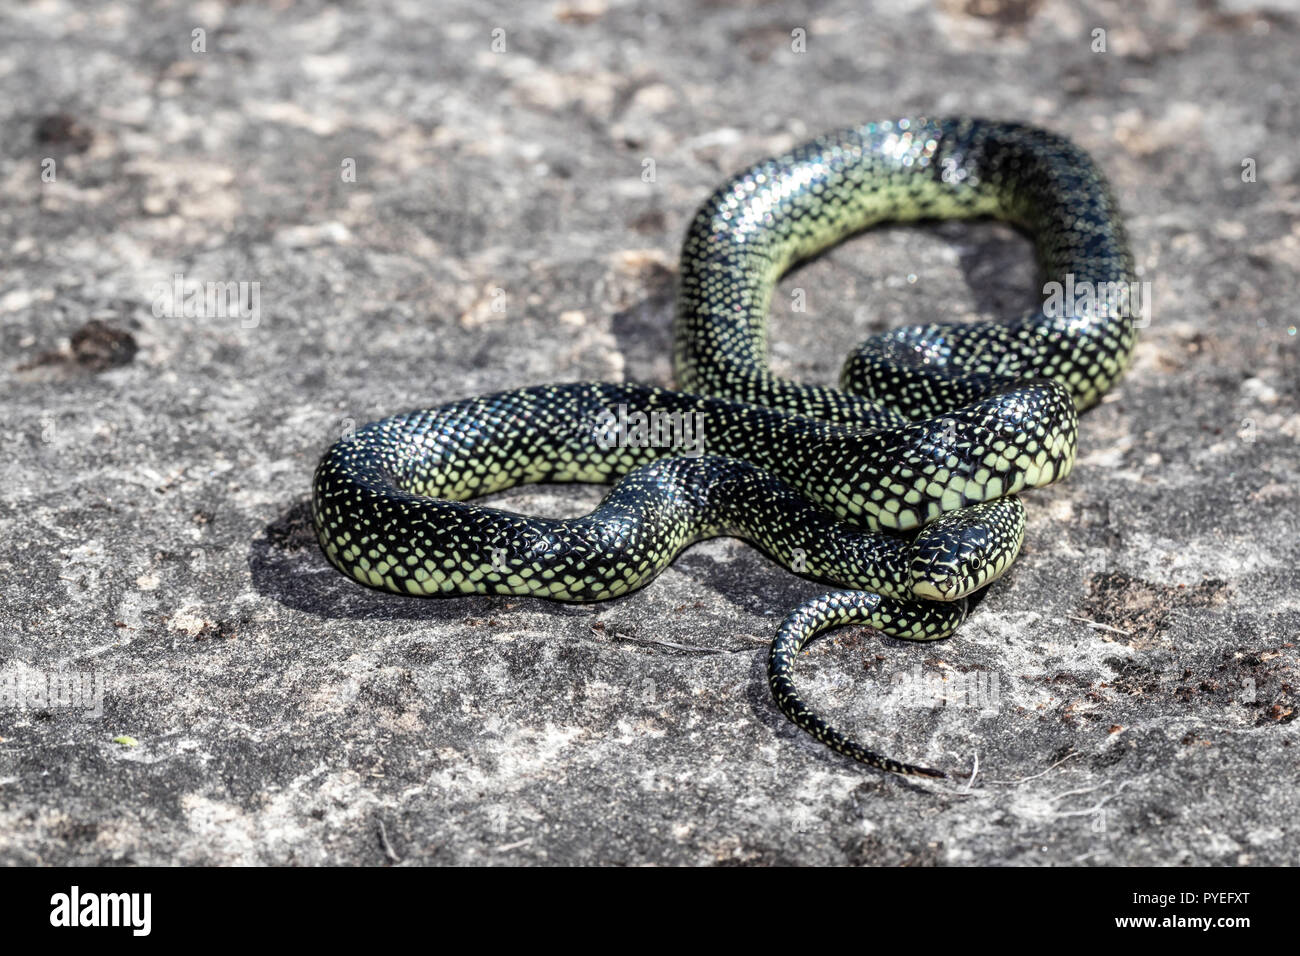 Speckled king snake - Lampropeltis getula holbrooki Stock Photo